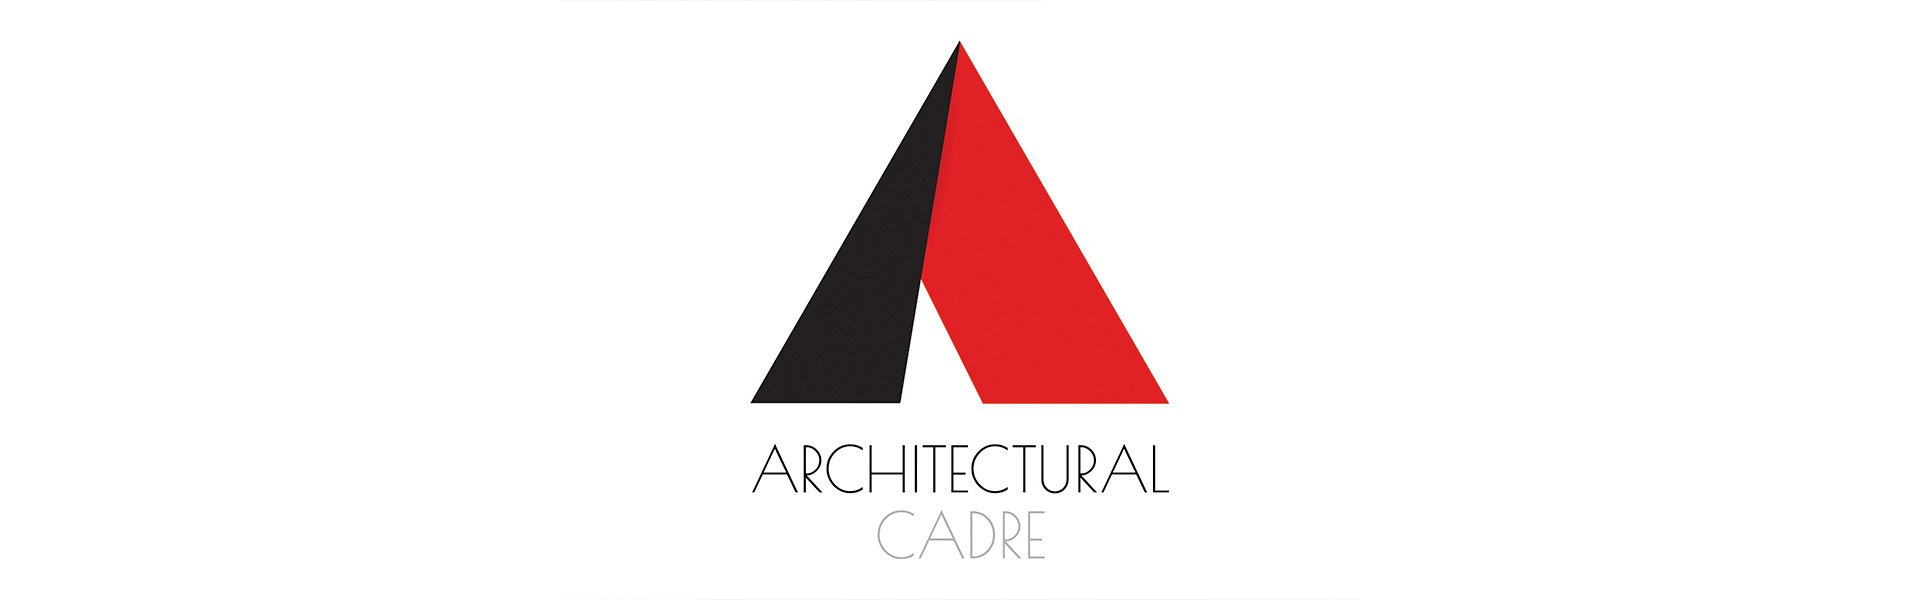 Architectural Cadre Branding